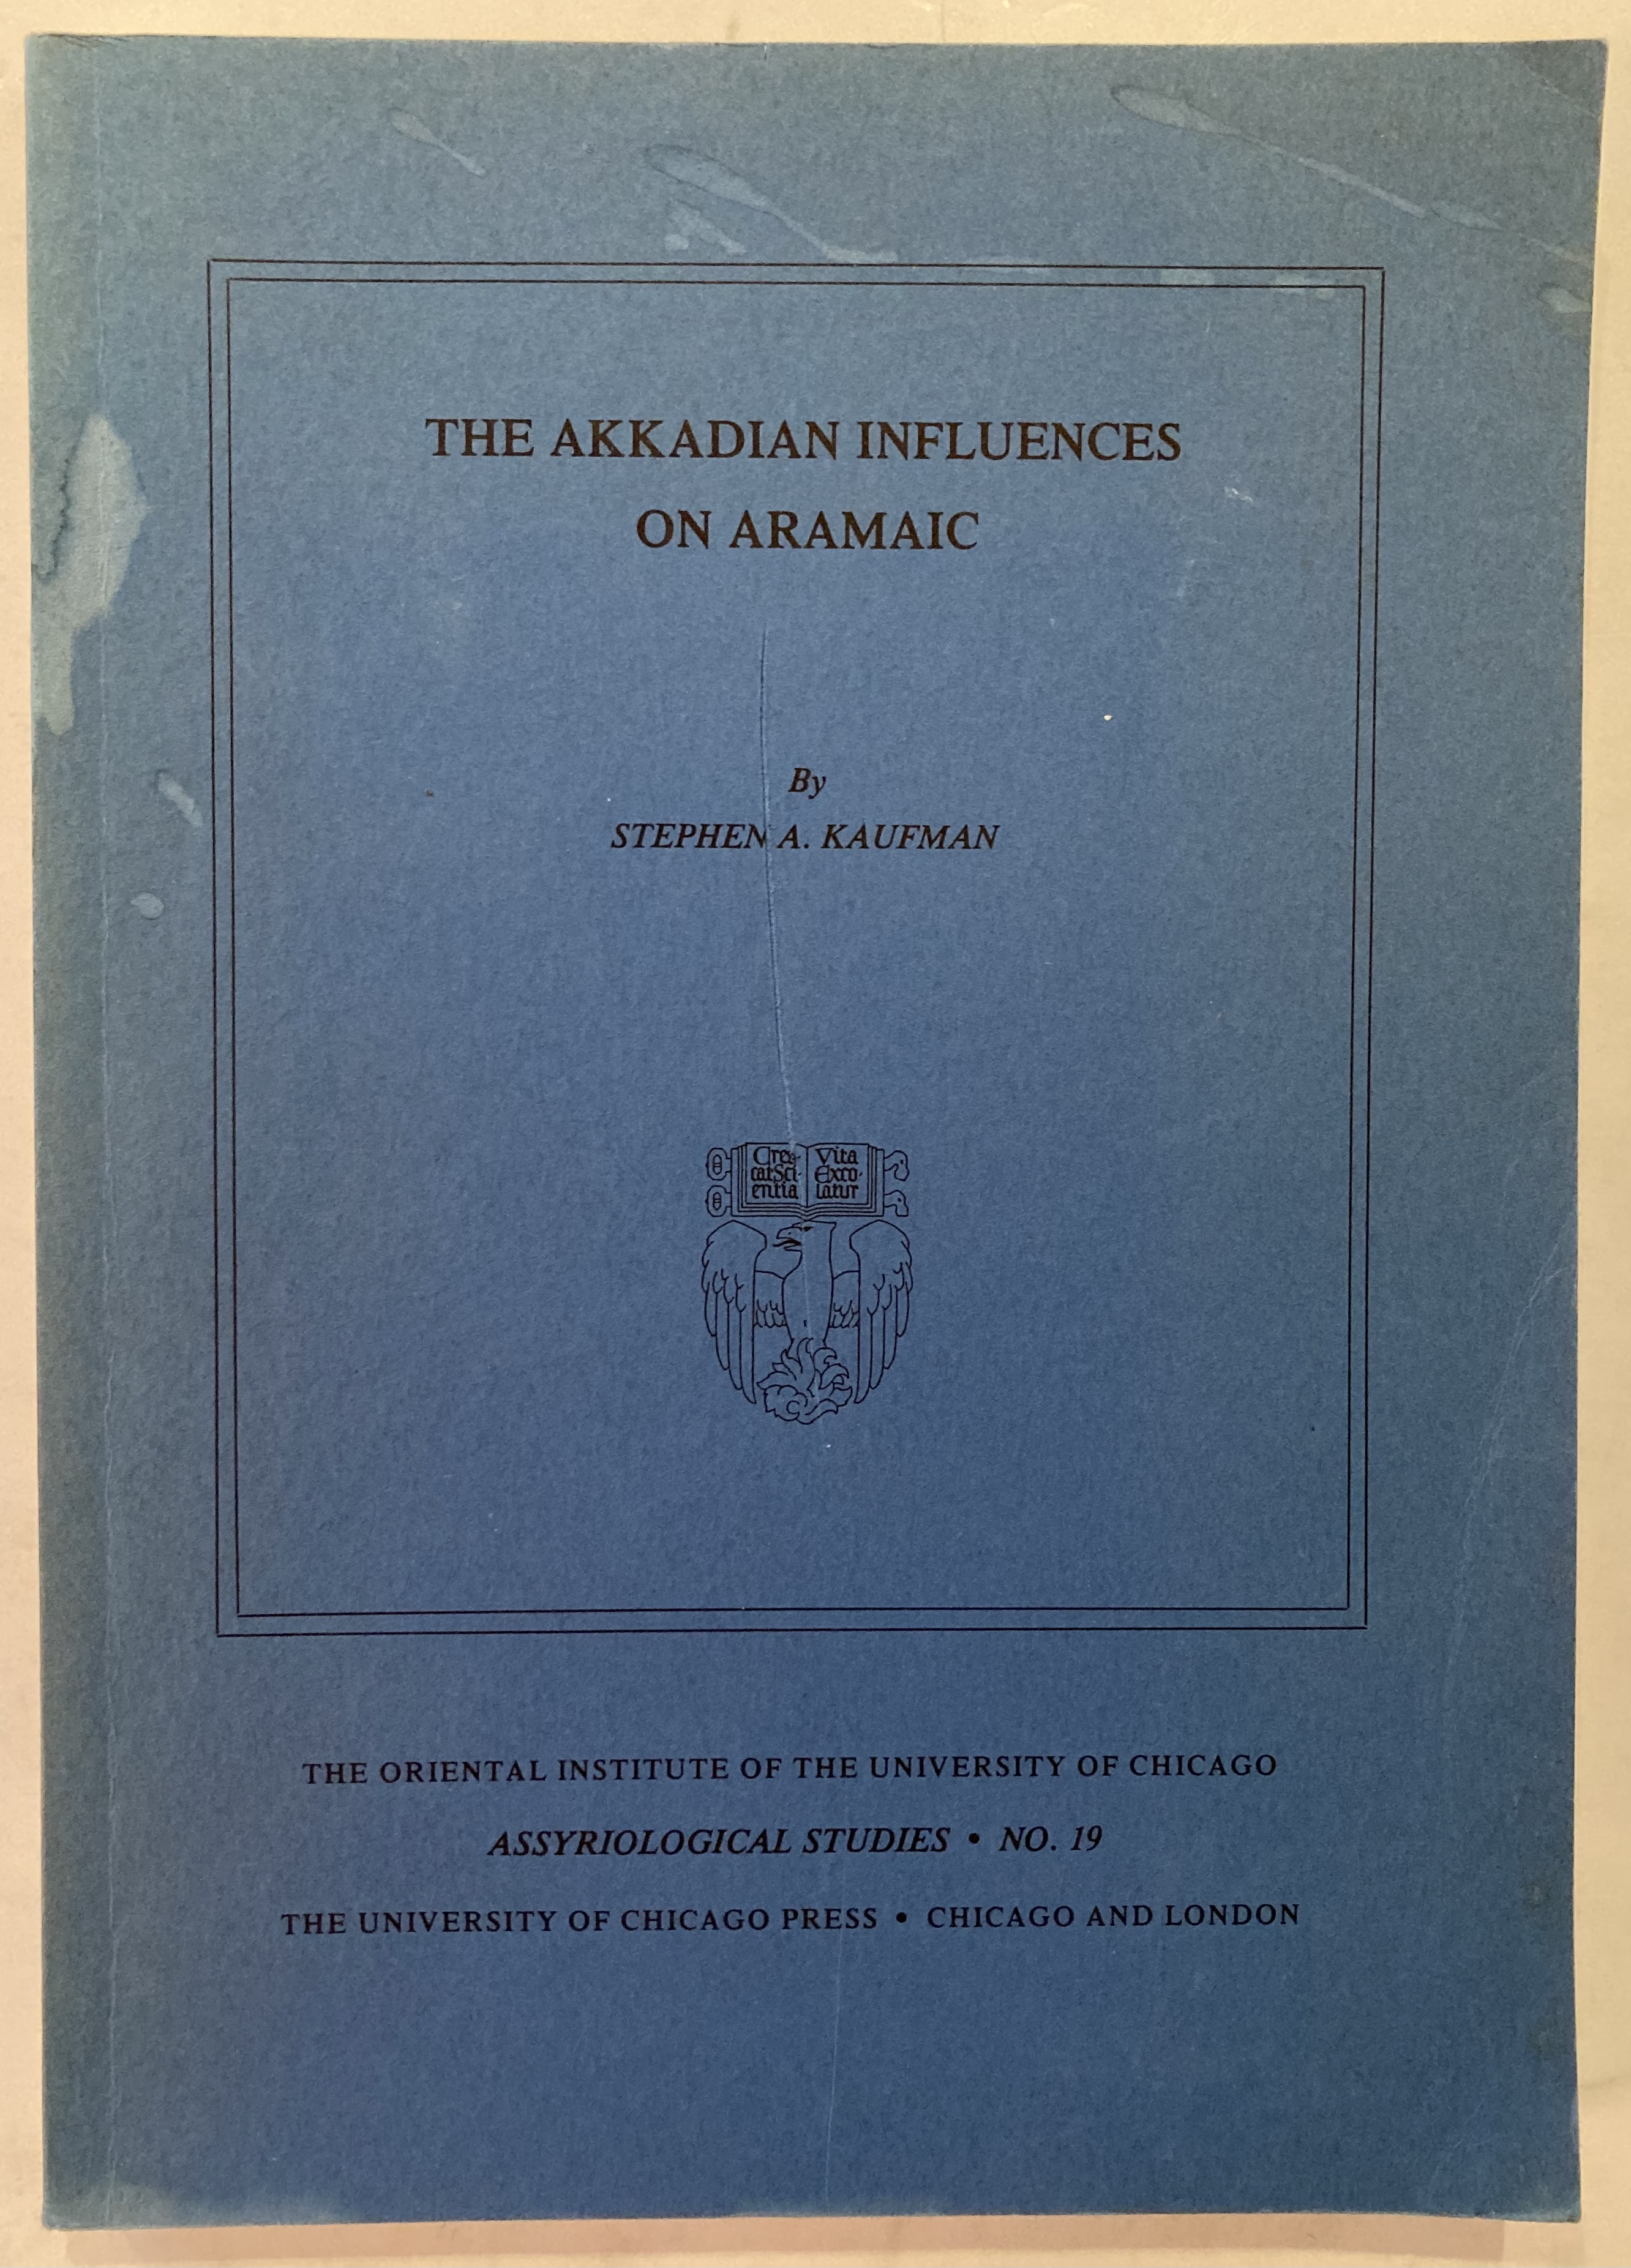 The Akkadian Influences on Aramaic (Assyriological Studies, 19) - Stephen A. Kaufman